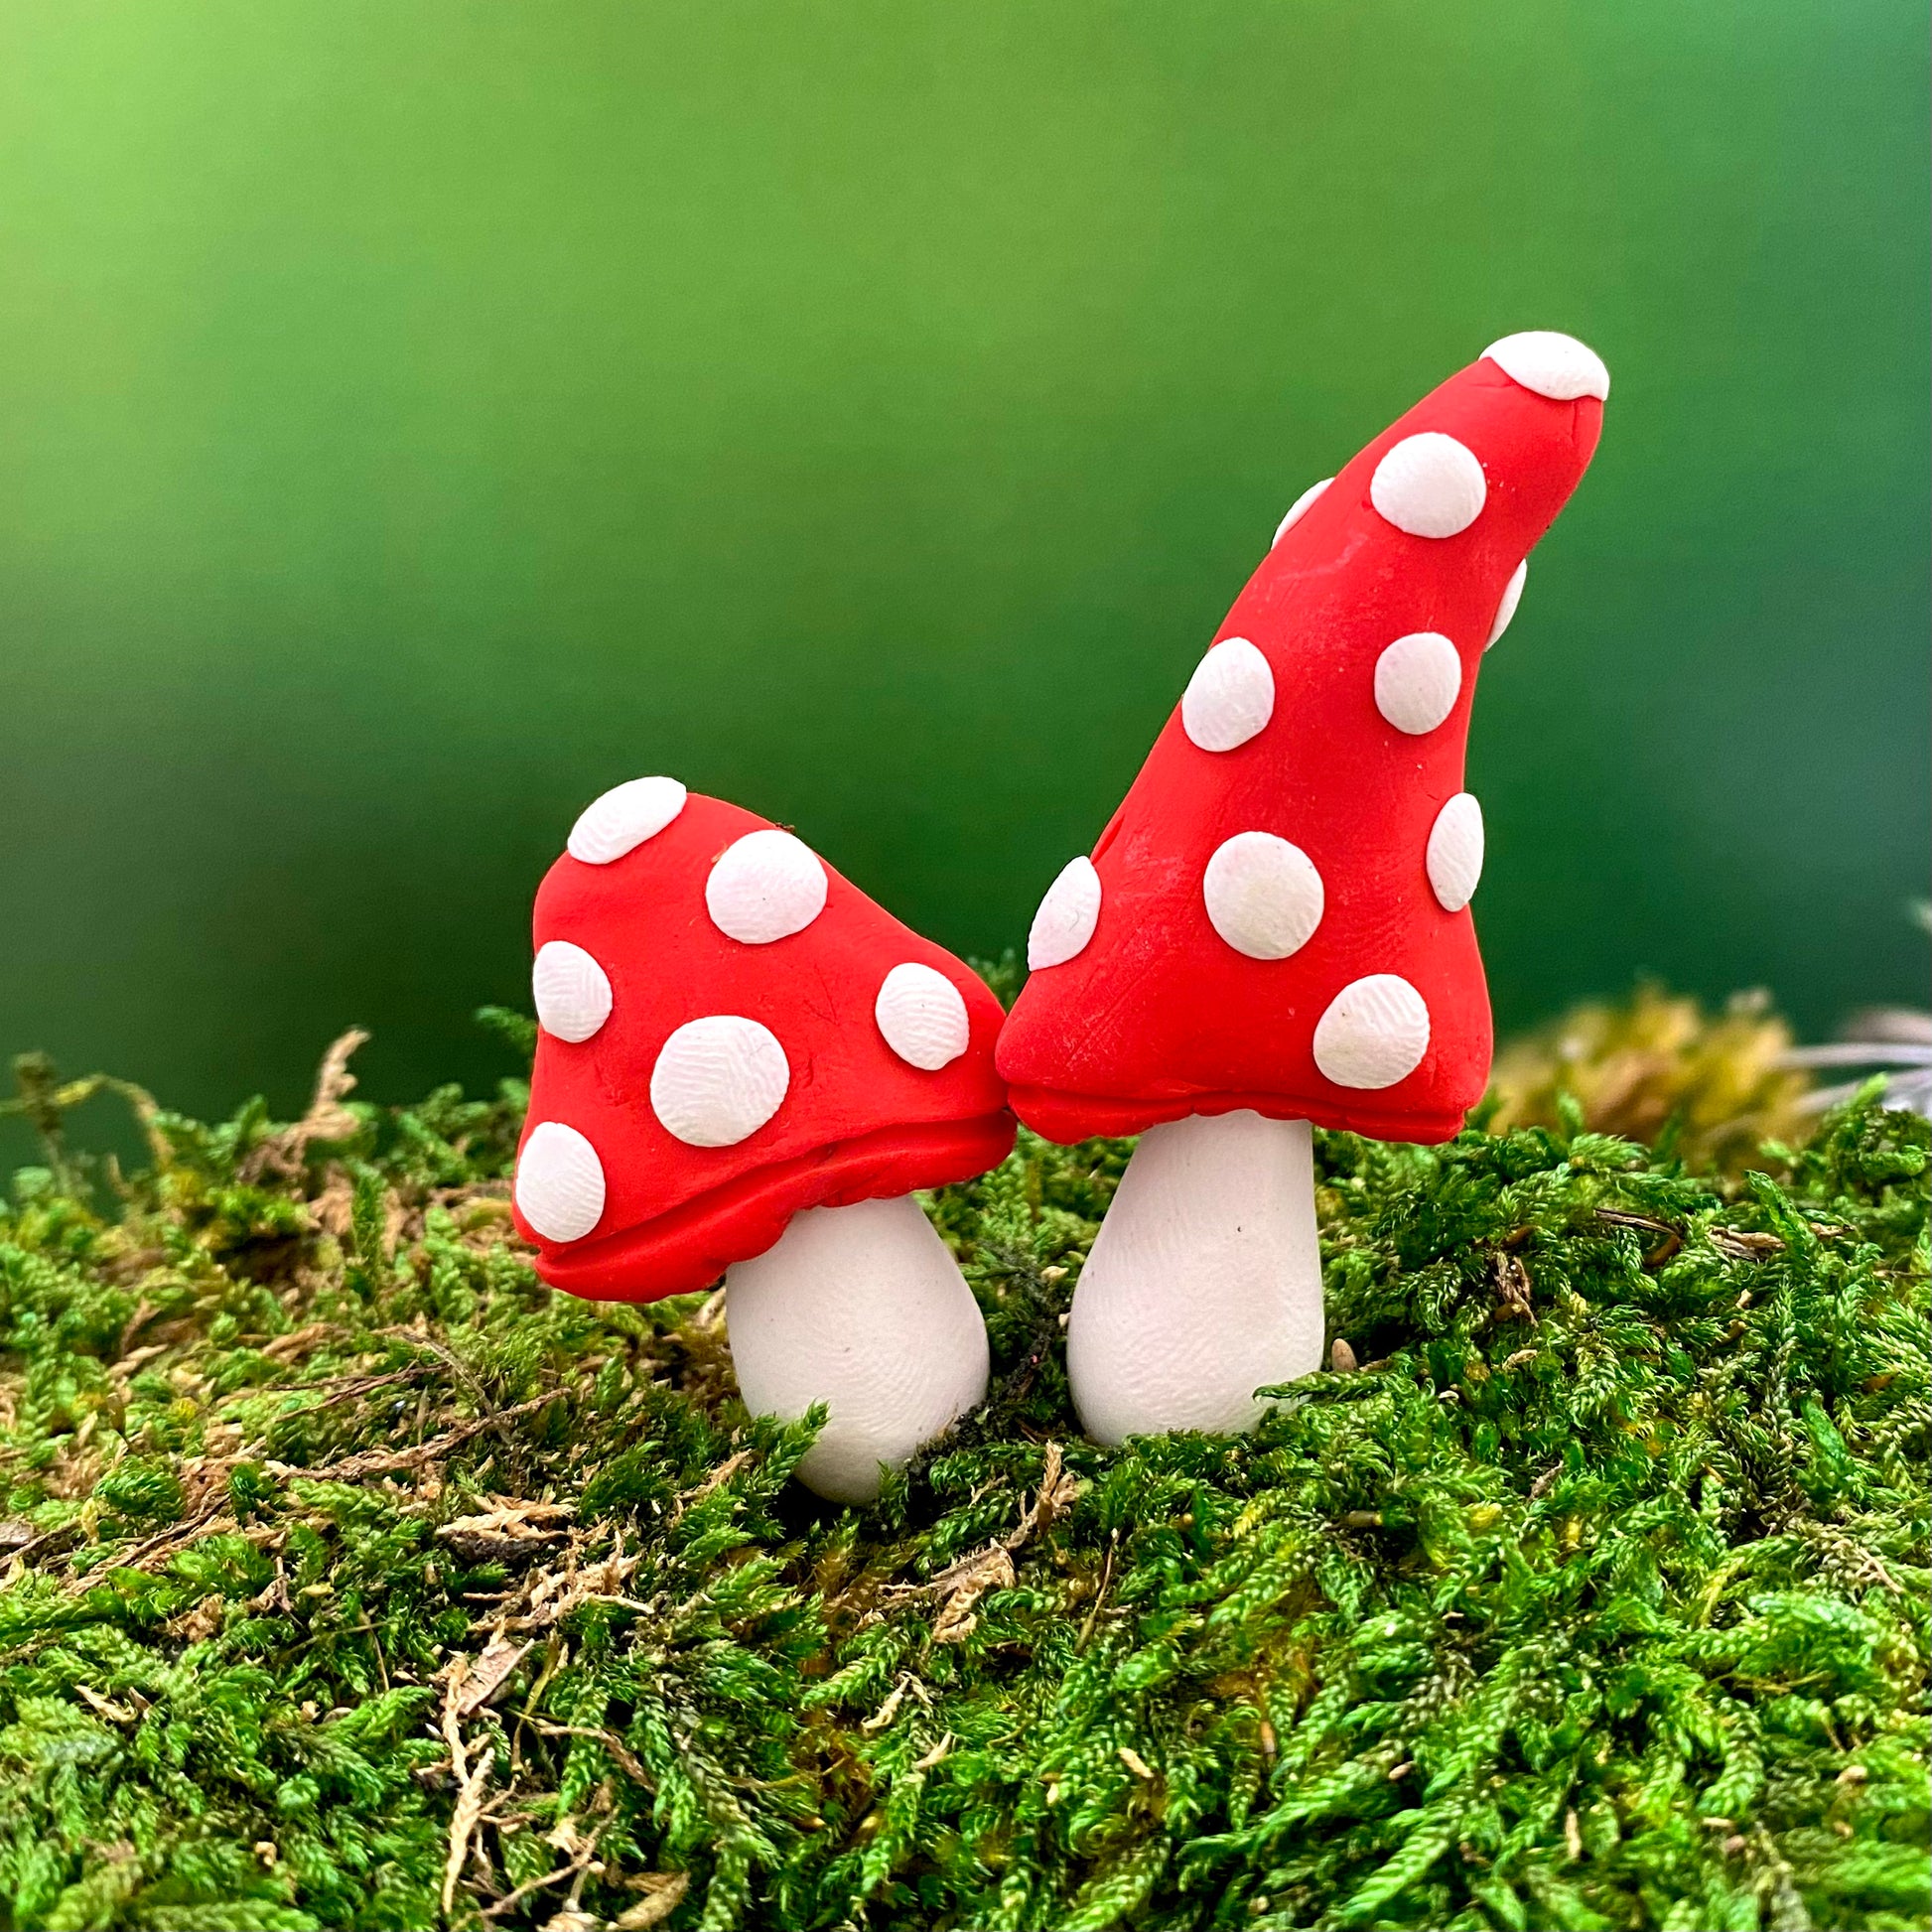 Red and White whimsical Mushrooms, Australian Fairy Gardens, Mushrooms